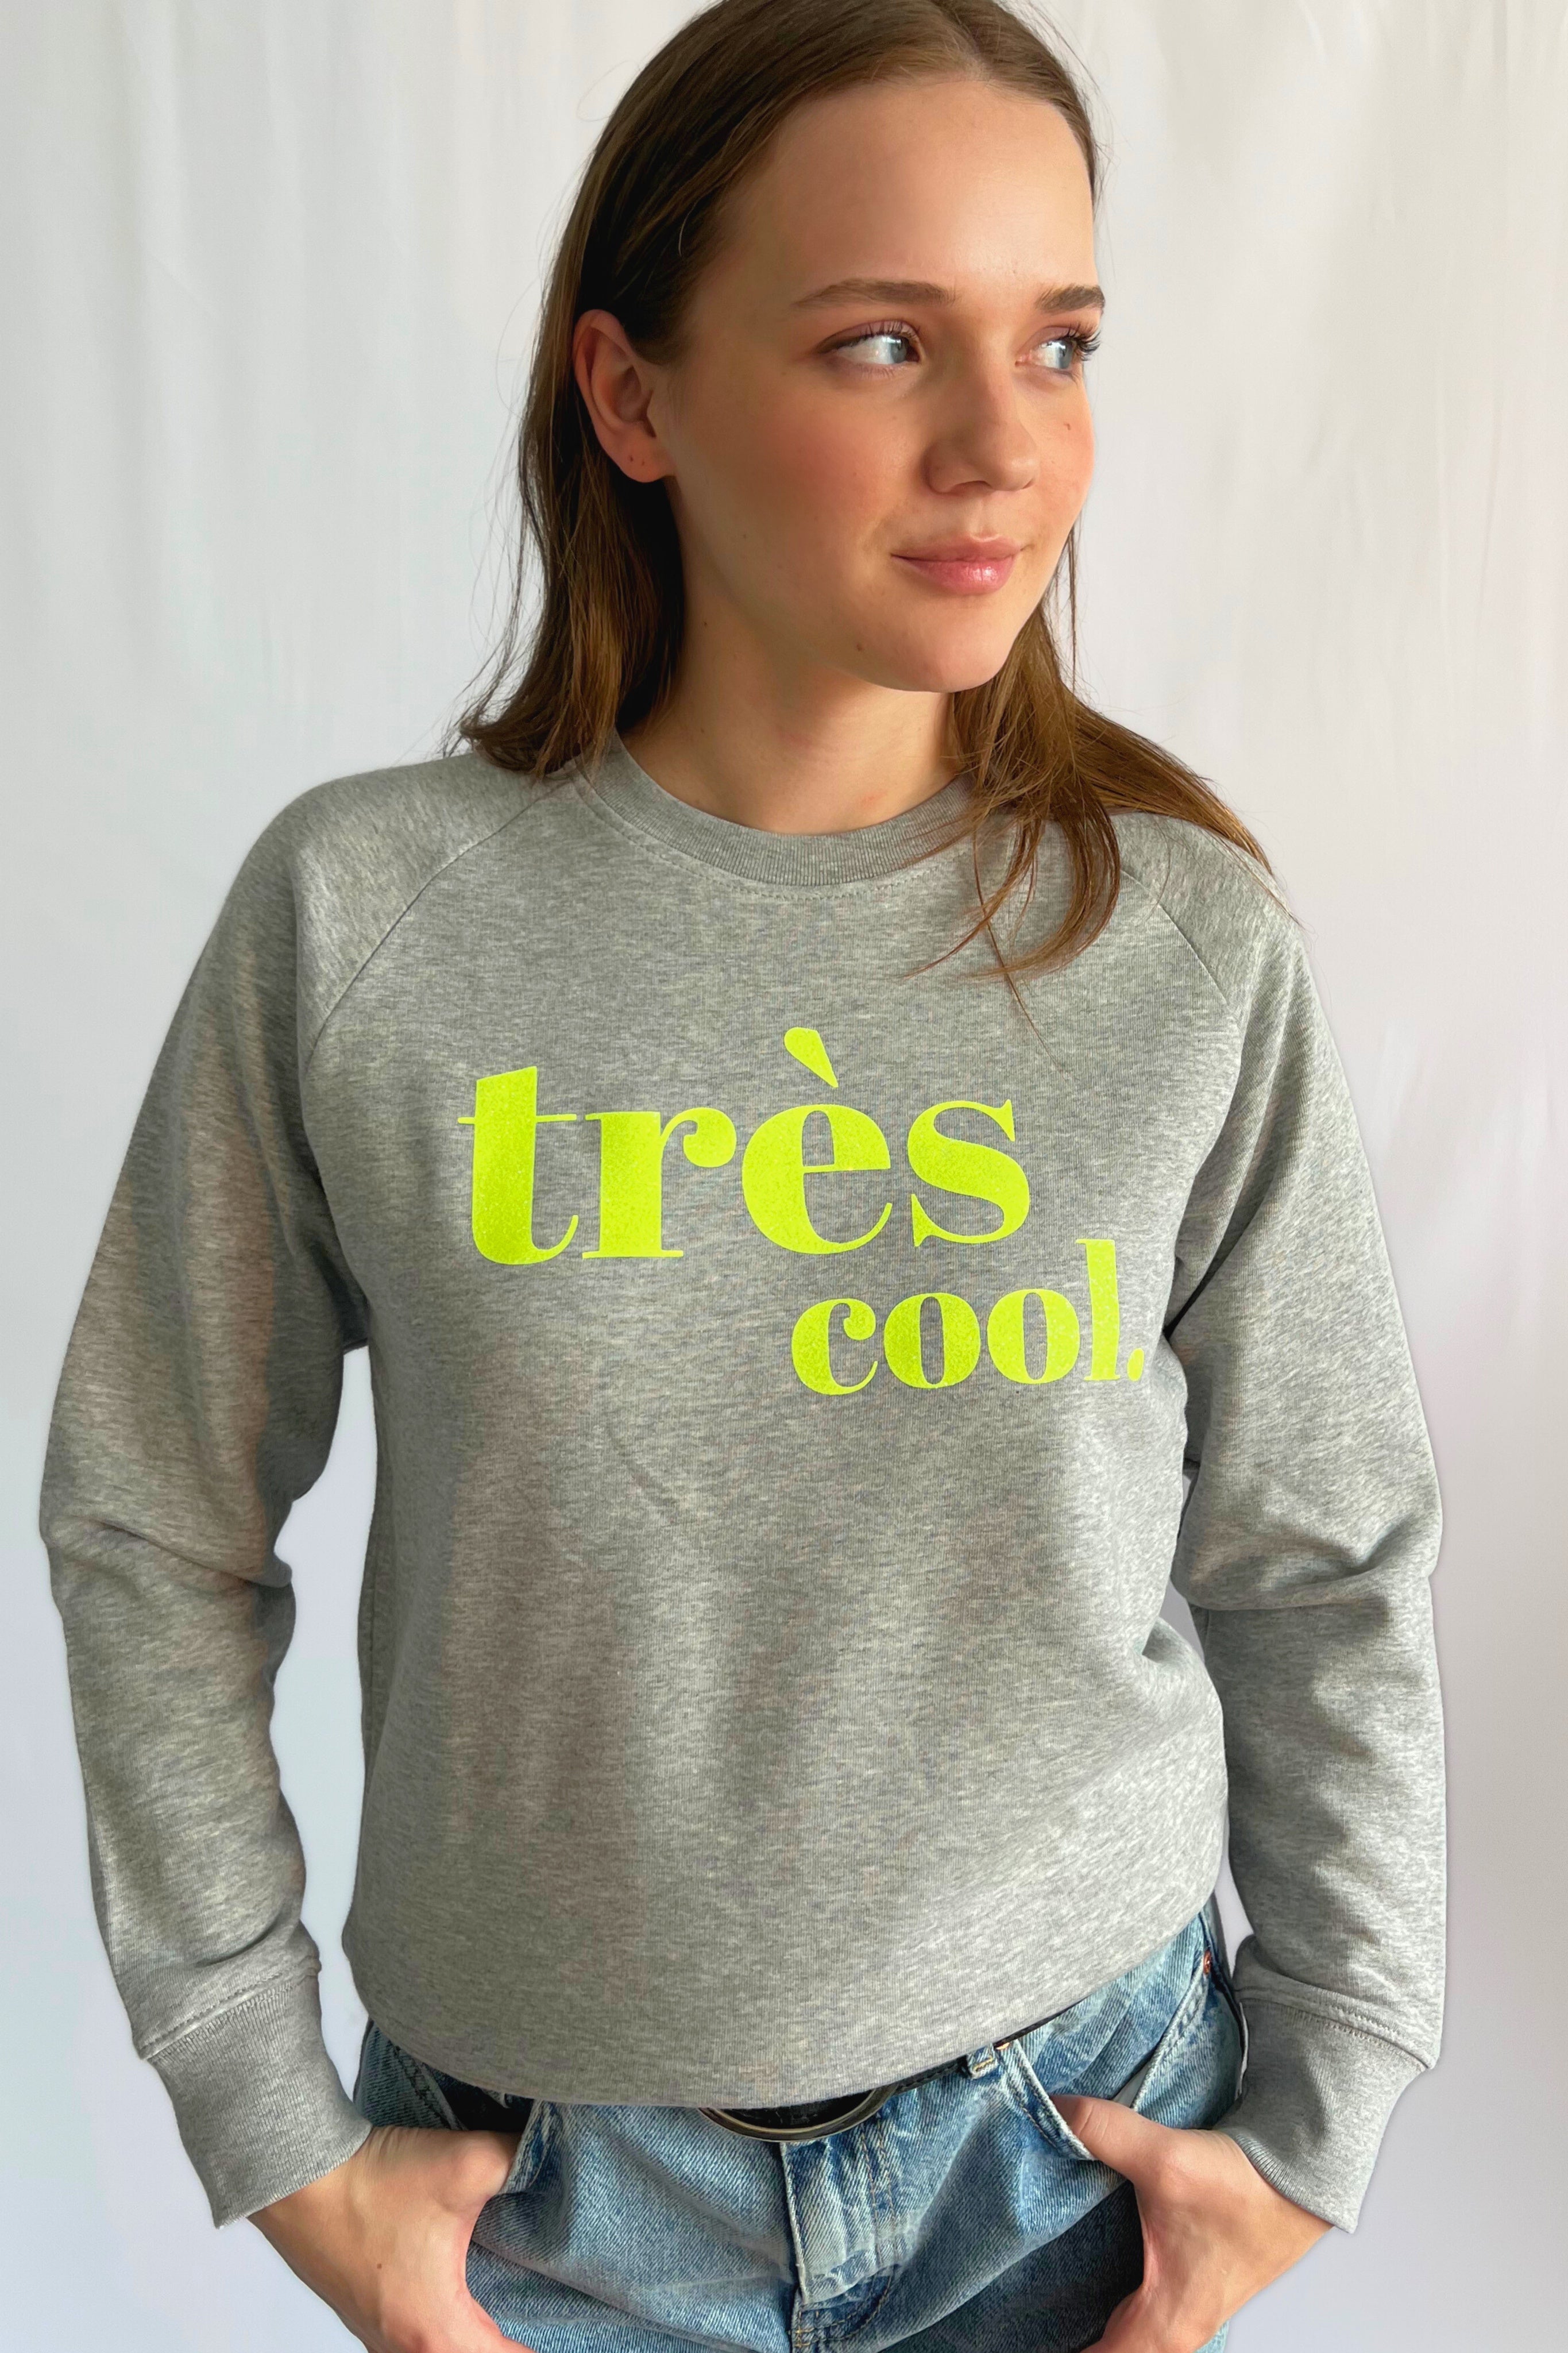 Très cool Sweatshirt - Grau/Neon Gelb Glitzer